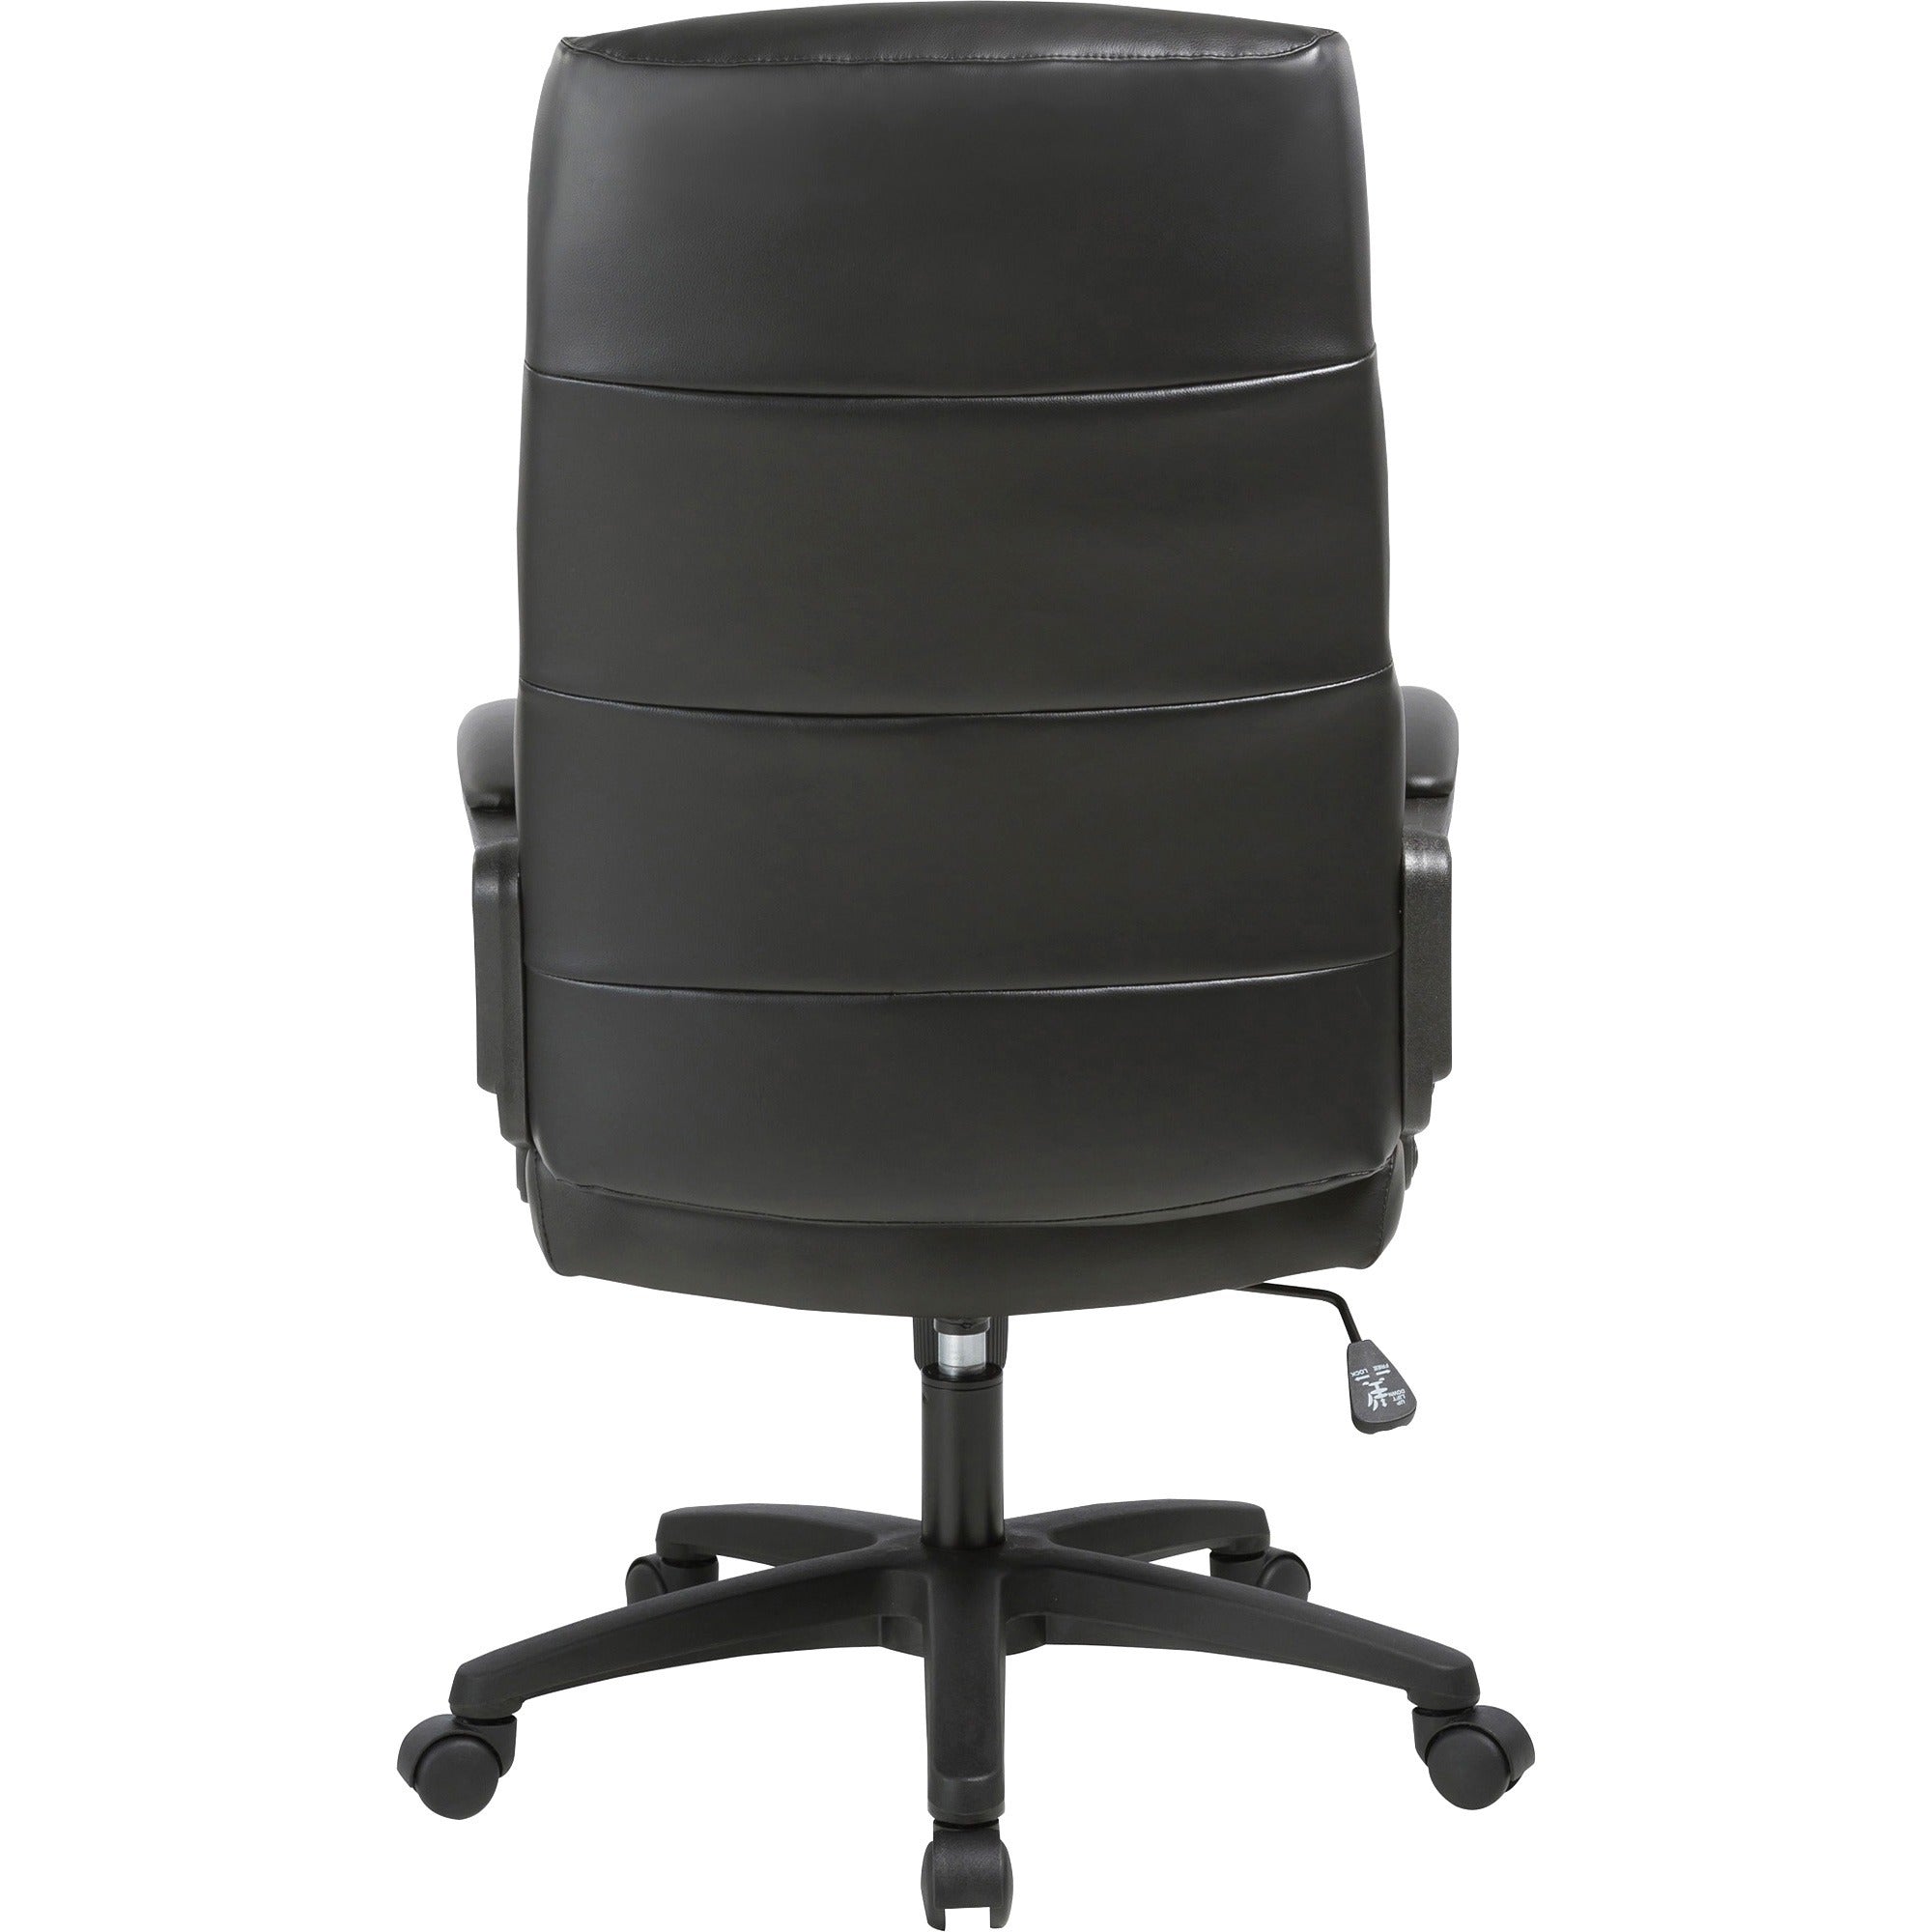 soho-soho-high-back-executive-chair-black-bonded-leather-seat-black-bonded-leather-back-high-back-5-star-base-1-each_llr41843 - 3